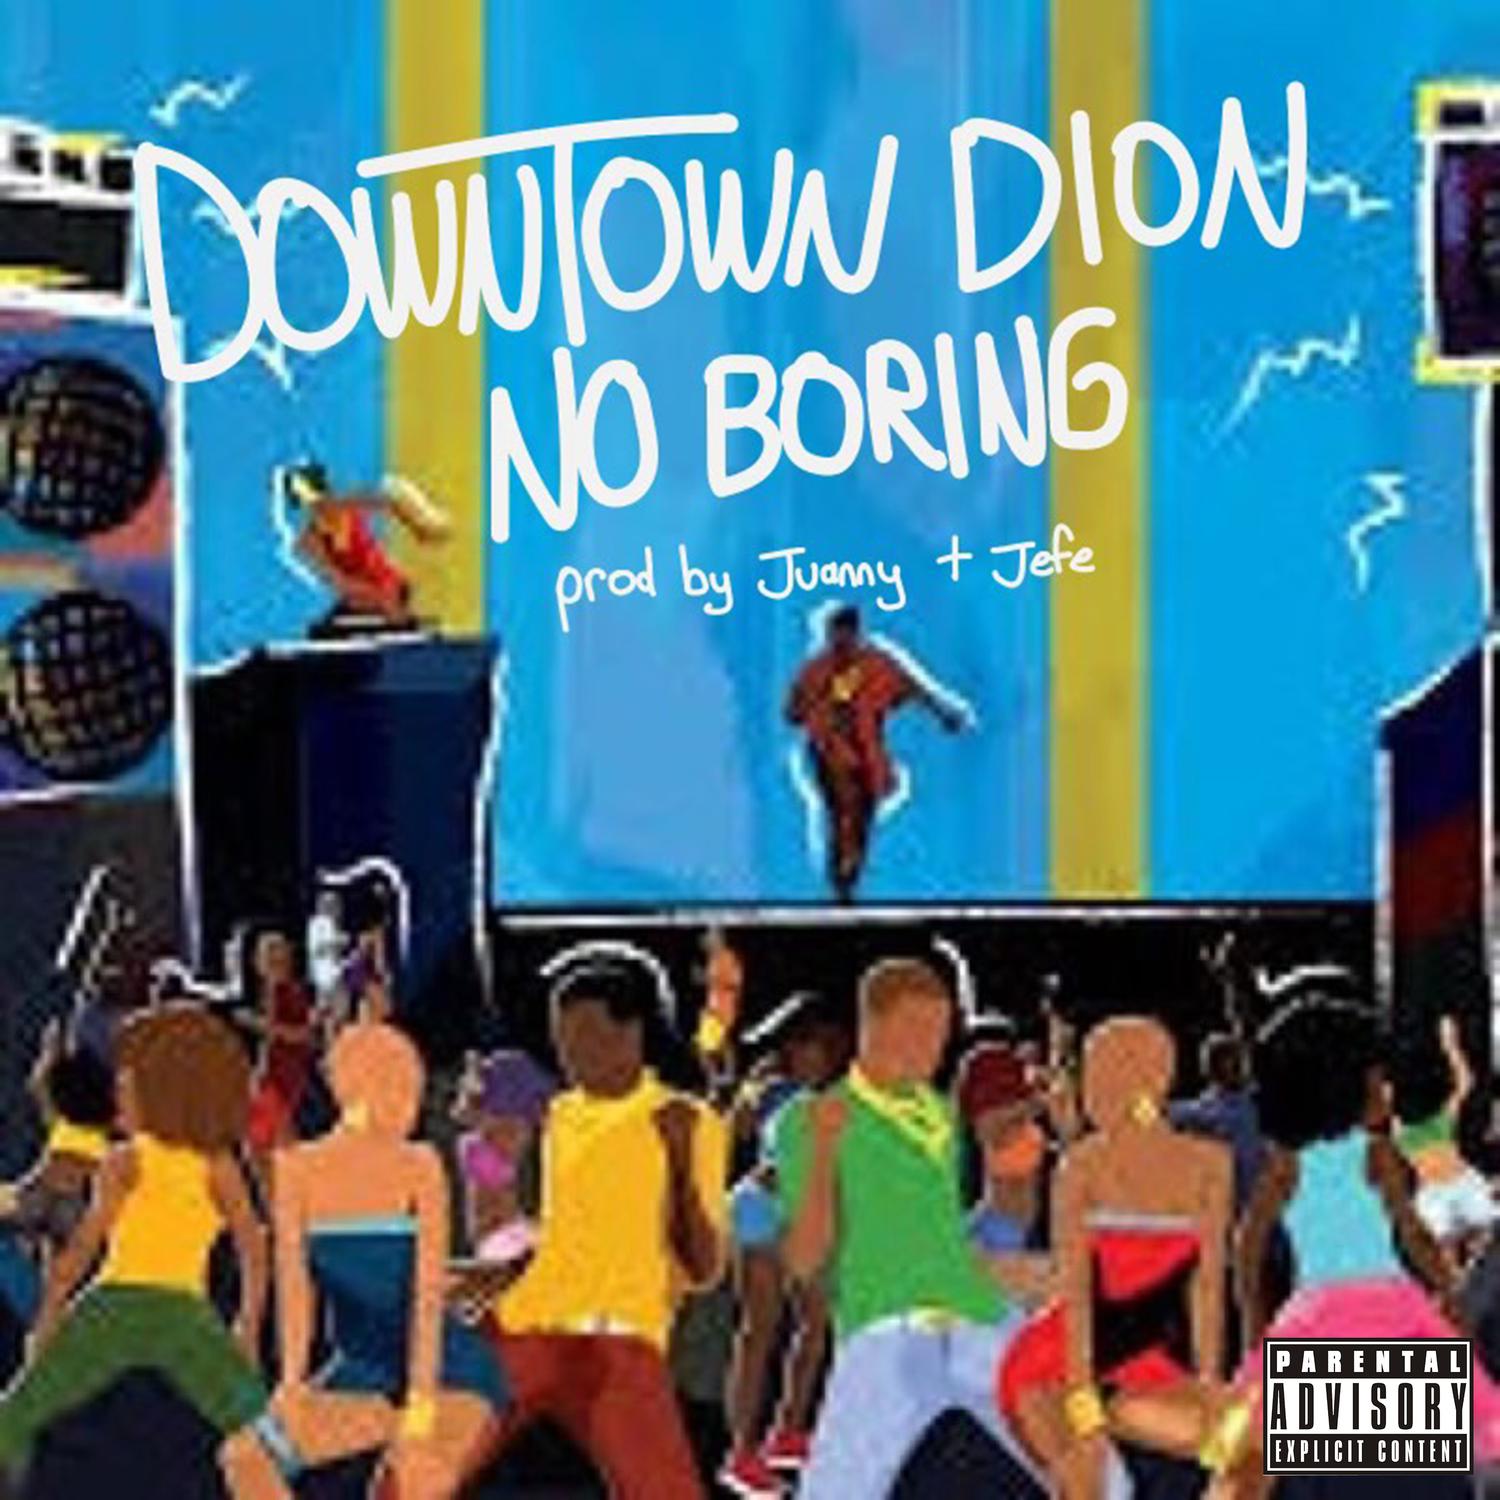 Downtown Dion - No Boring